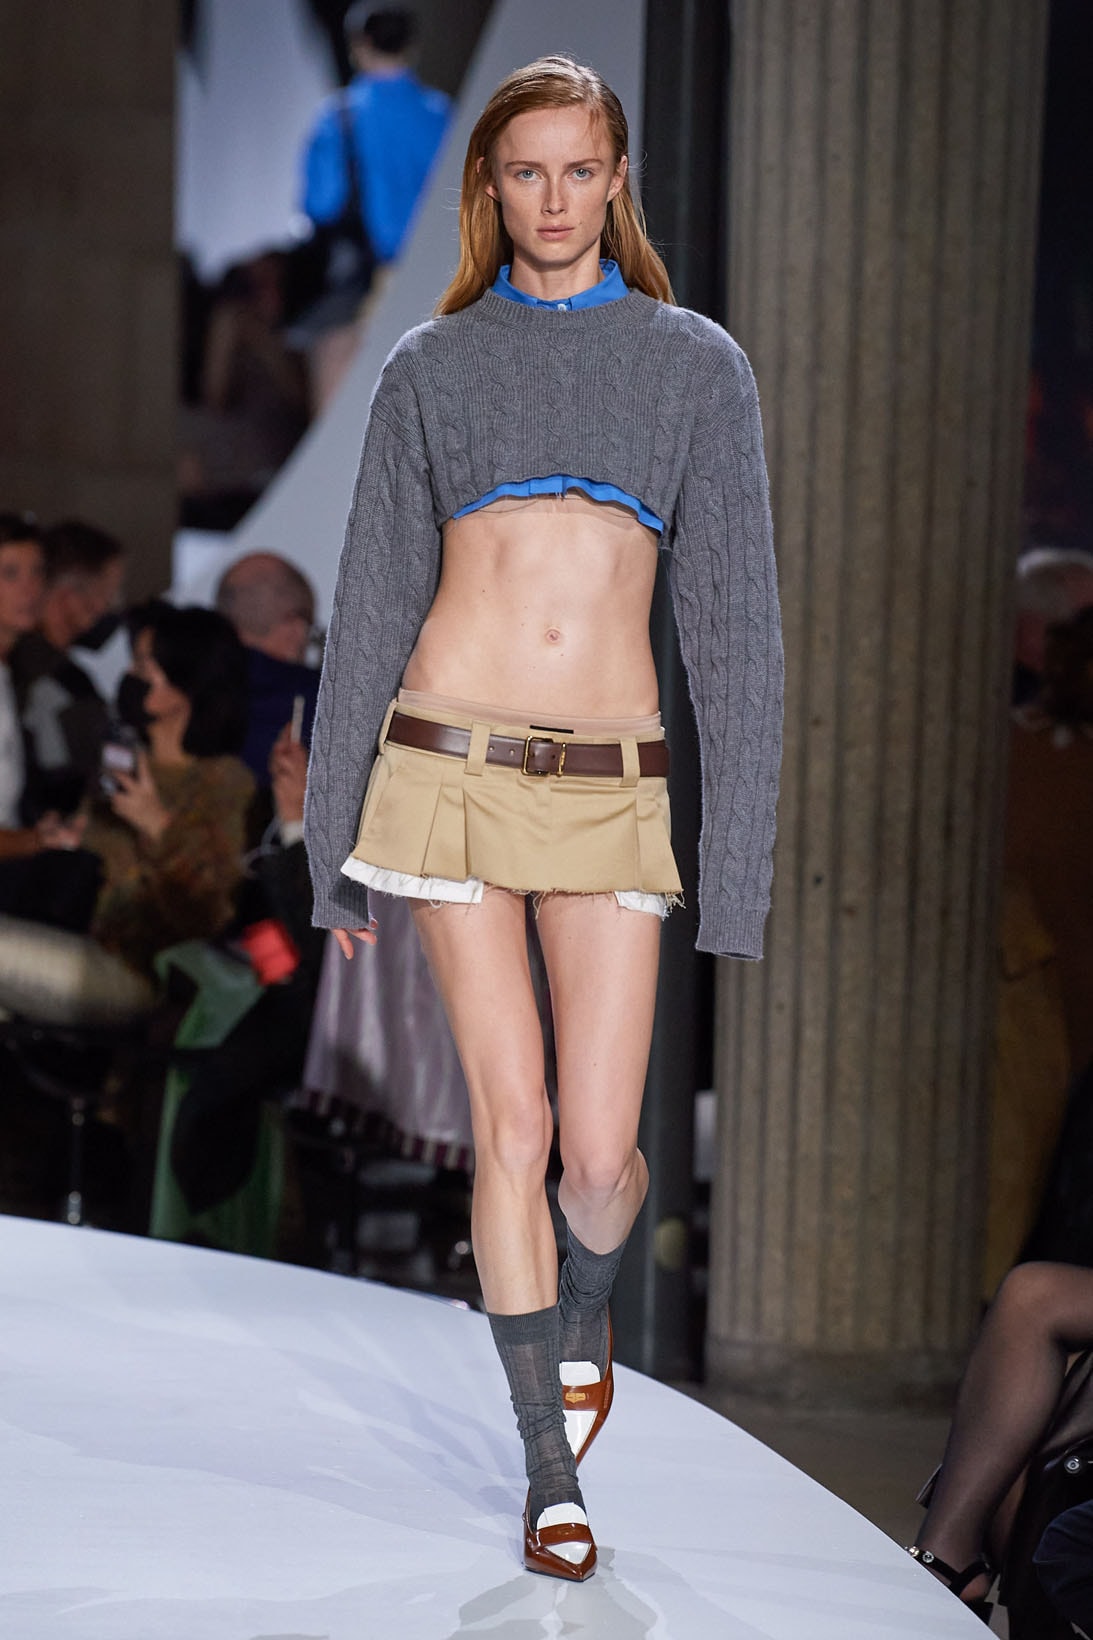 Miu Miu Spring Summer 2022 Collection New Balance 574 Collaboration Micro MIni Skirts Miuccia Prada